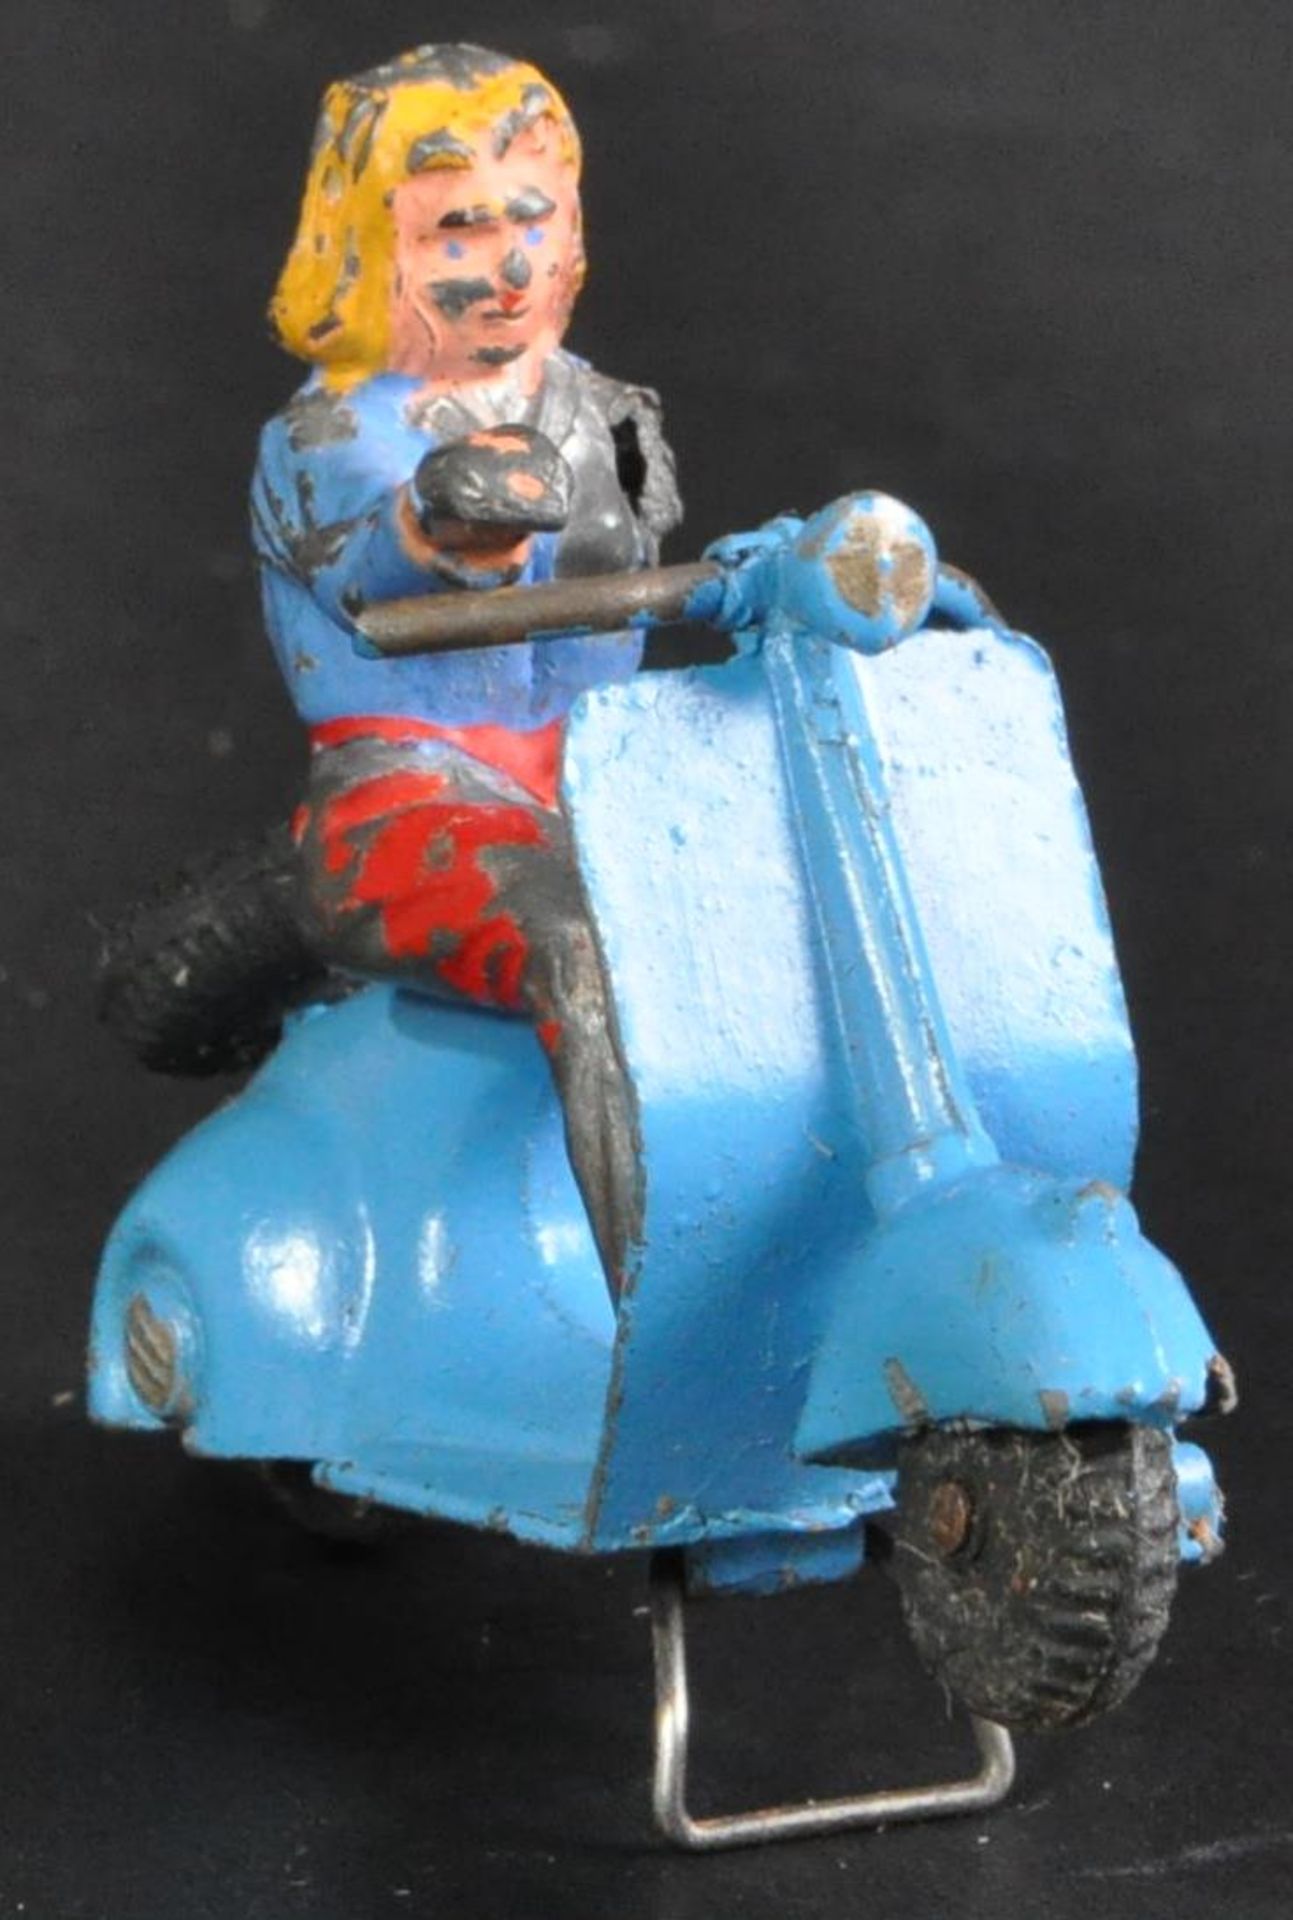 ORIGINAL VINTAGE MOKO POP-POP SERIES DIECAST MOTOR SCOOTER - Image 3 of 4